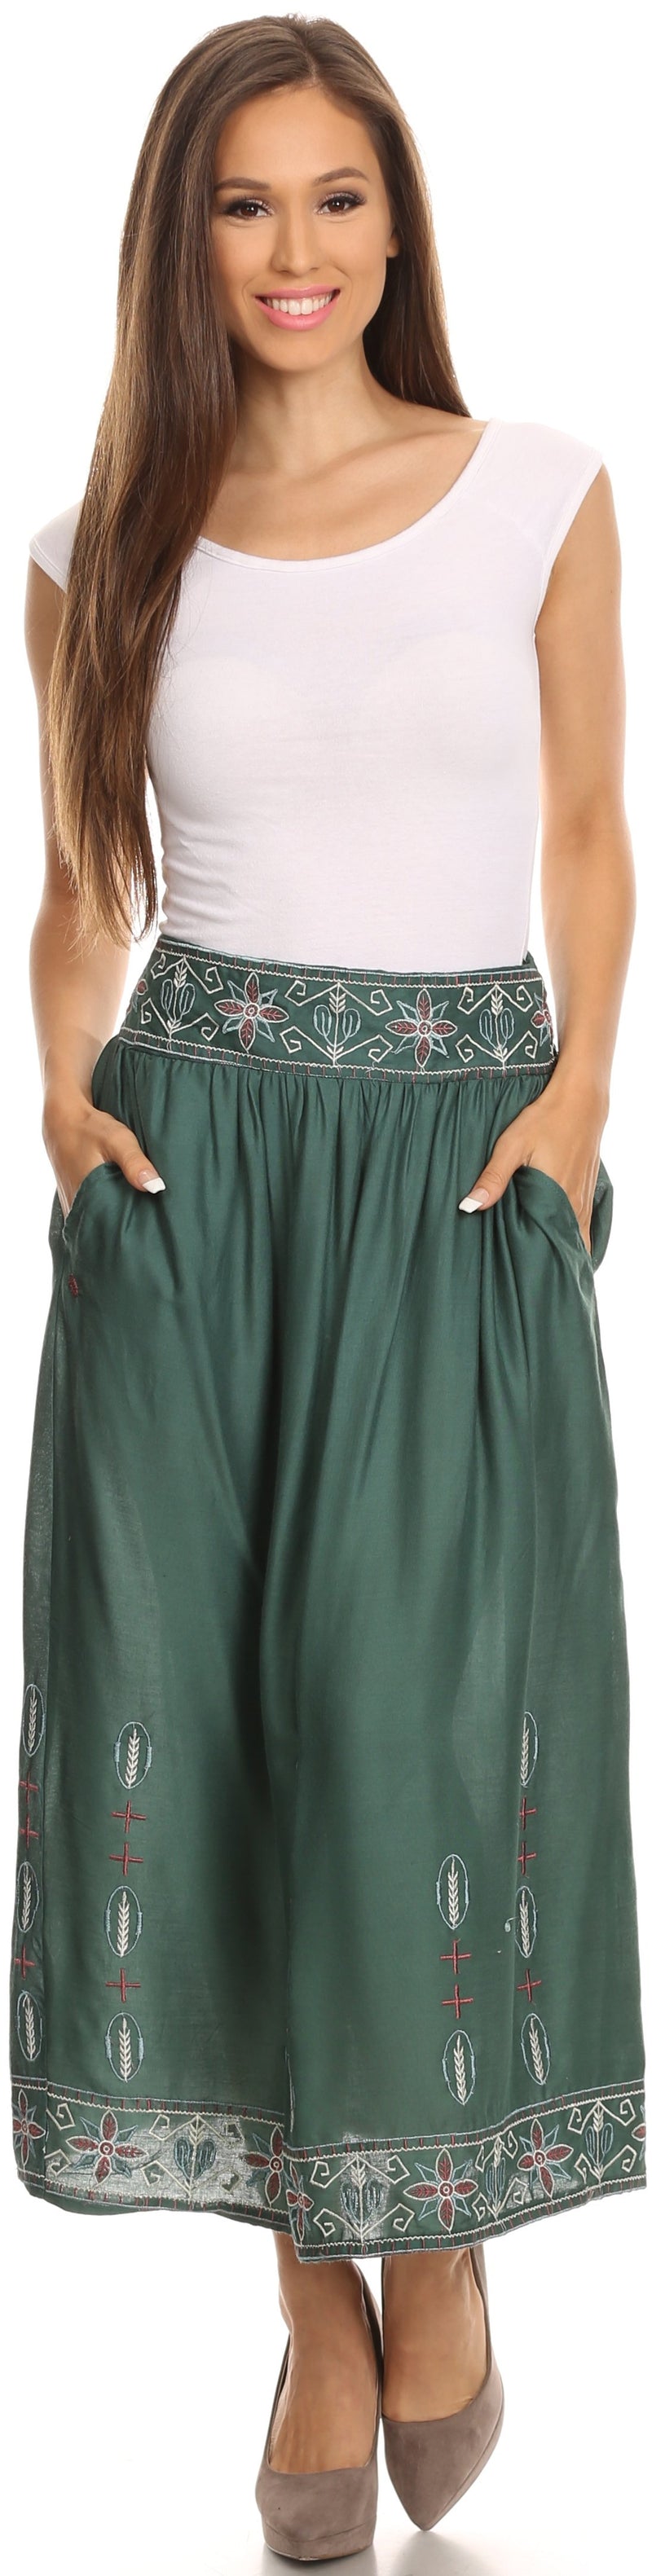 Sakkas Poch Long Tribal Aztec Floral Flower Embroidered Adjustable Waist Skirt